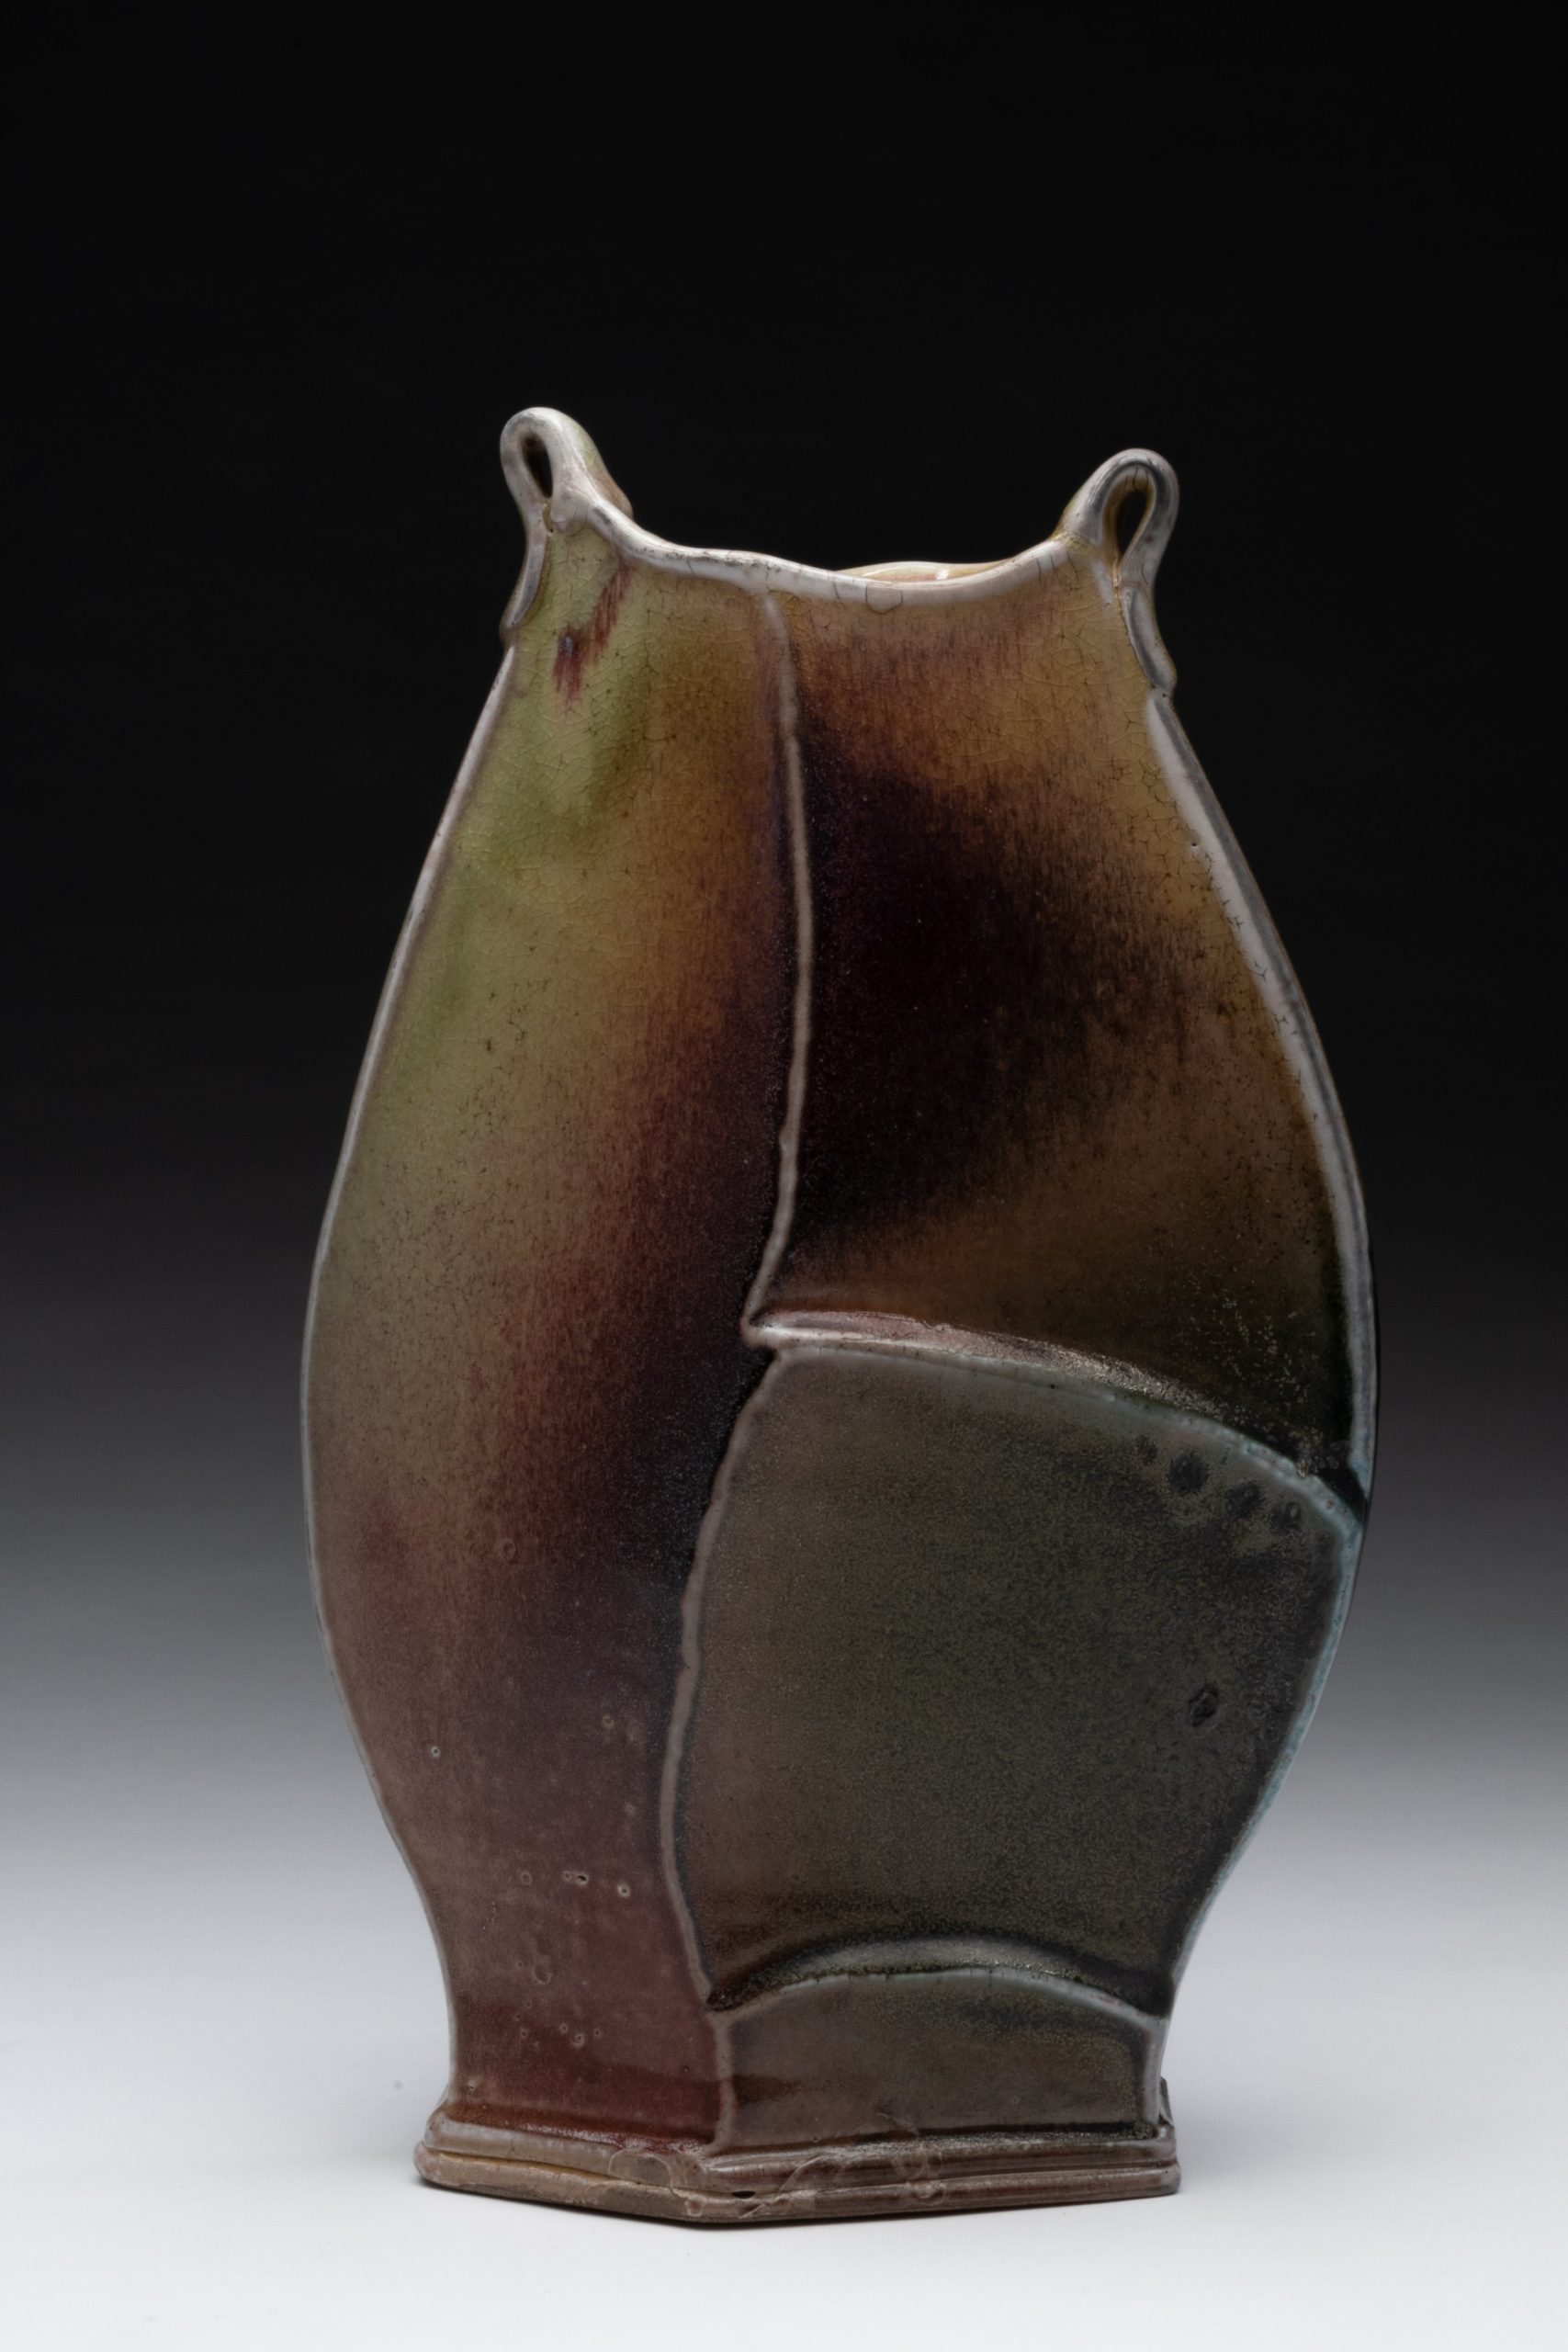 Cut vase by Brad Schwieger